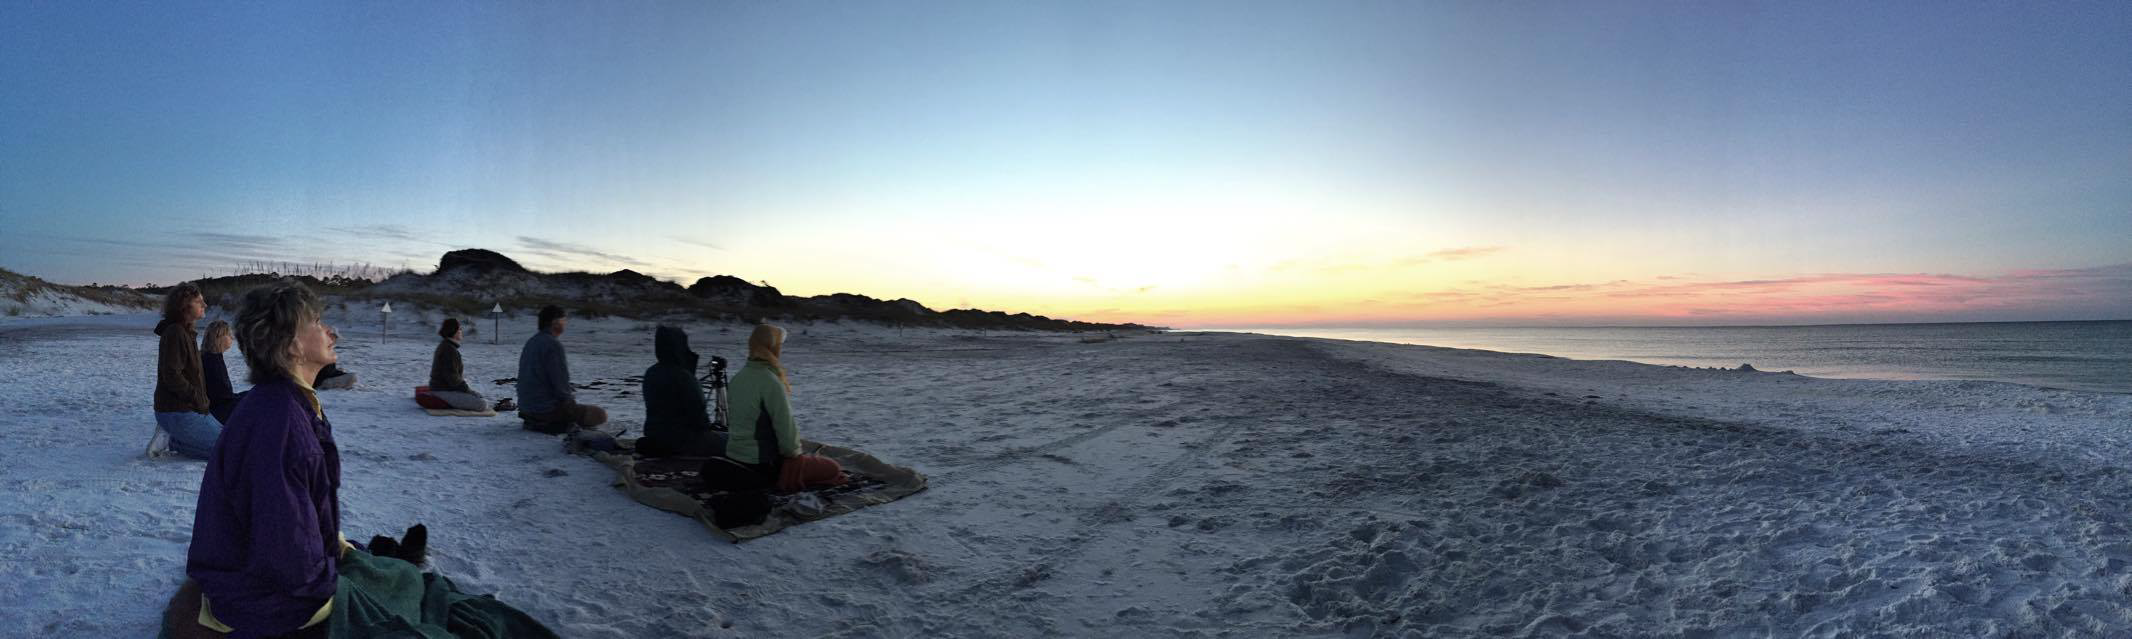 Sunrise meditation on the beach